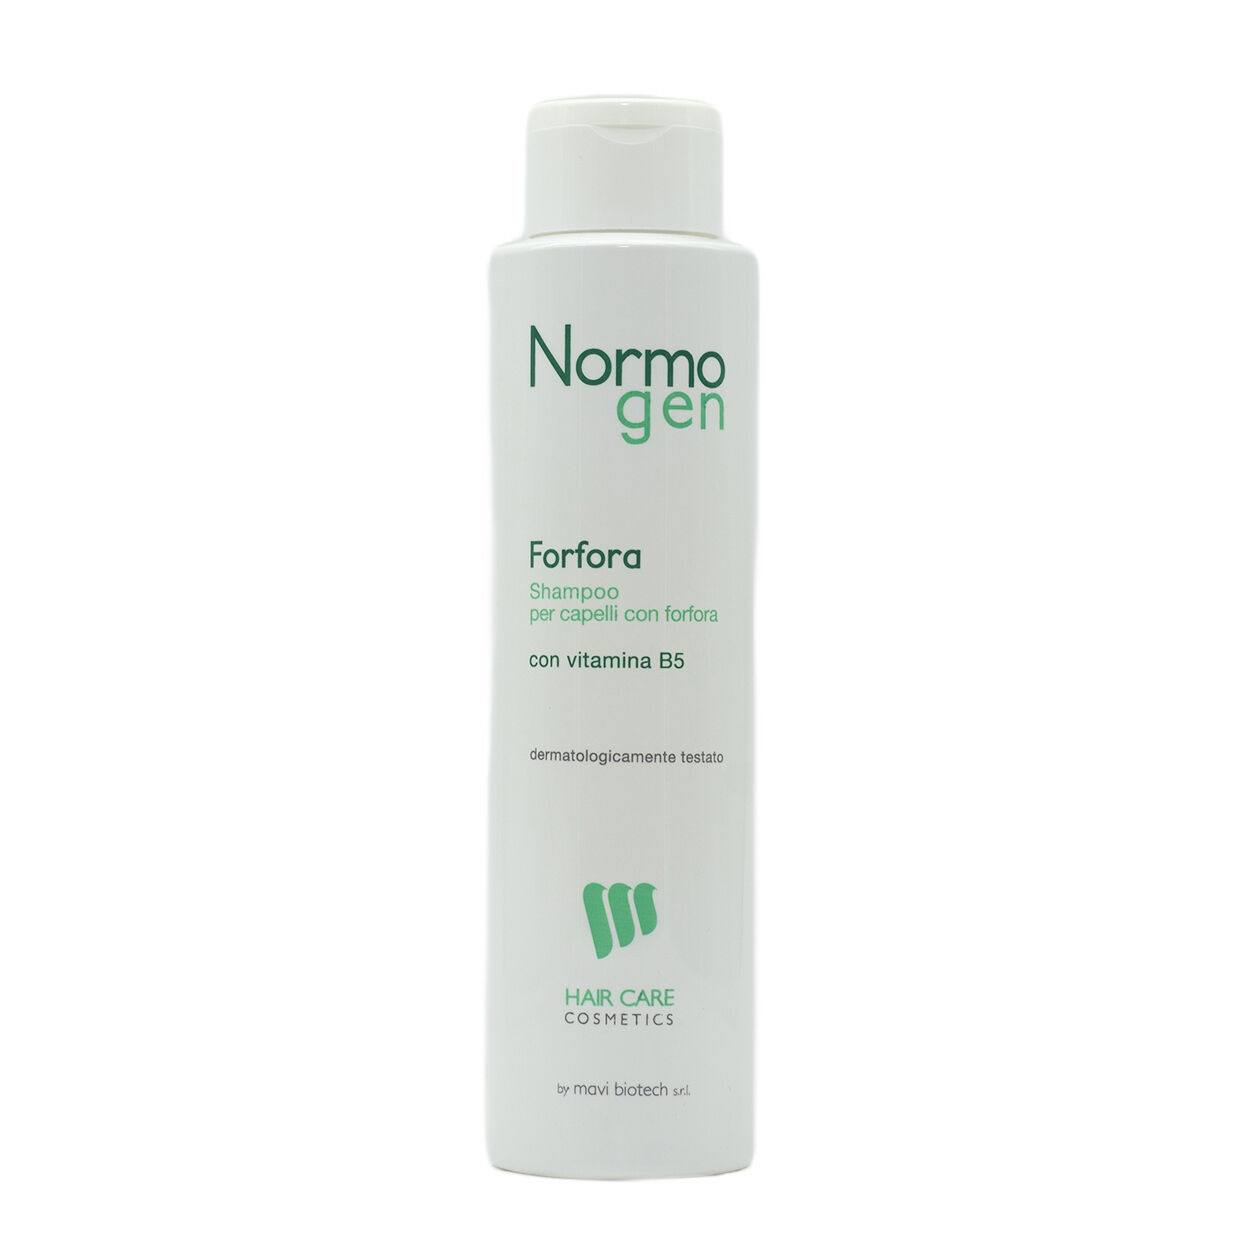 MAVI BIOTECH Srl Normogen forfora shampoo 300 ml